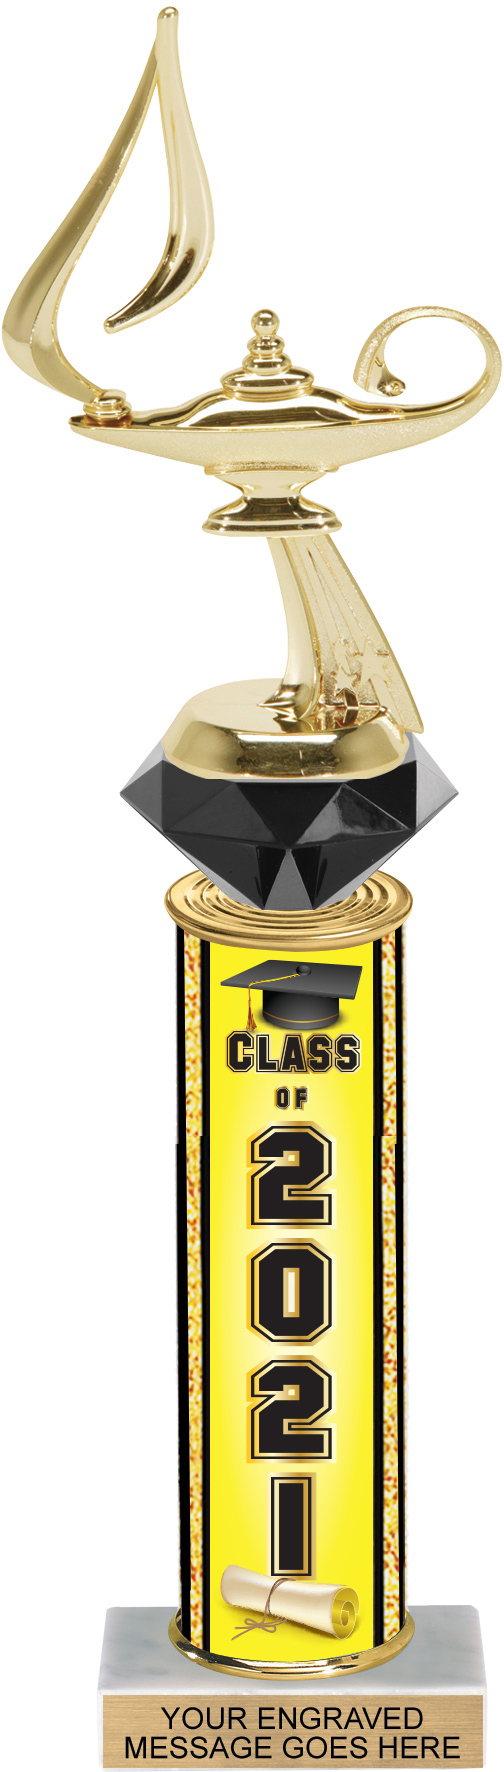 Diamond Riser 13 inch Class of 2021 Trophy